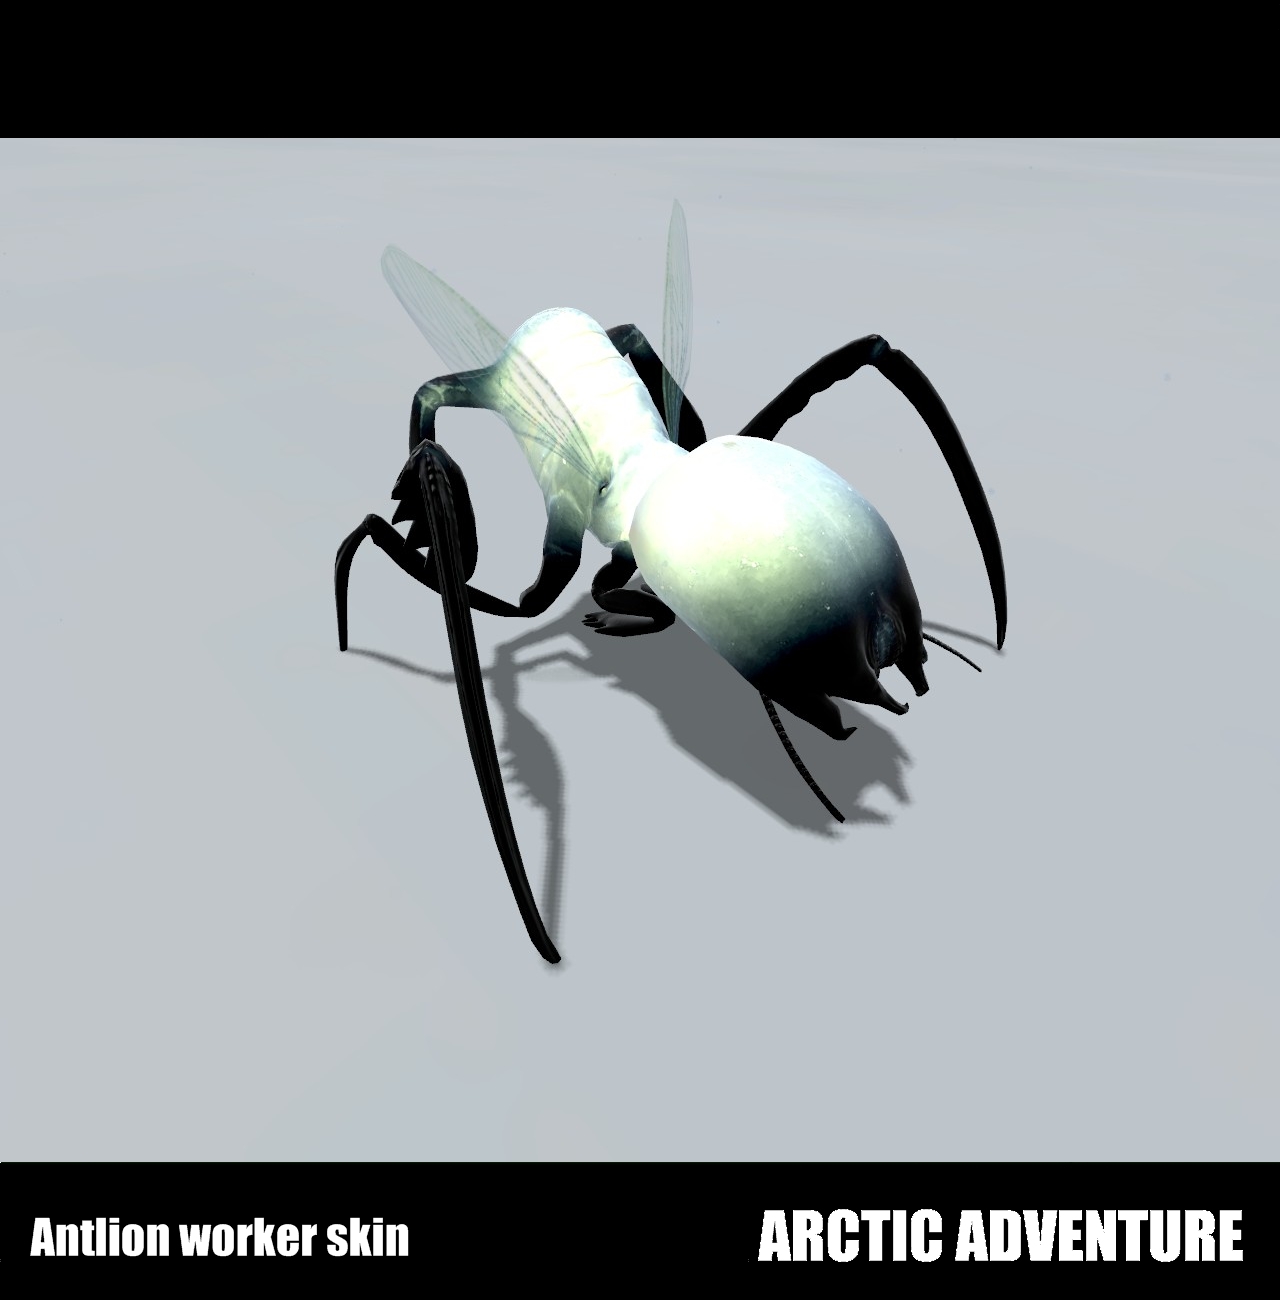 Arctic antlion worker skin image - Mod DB